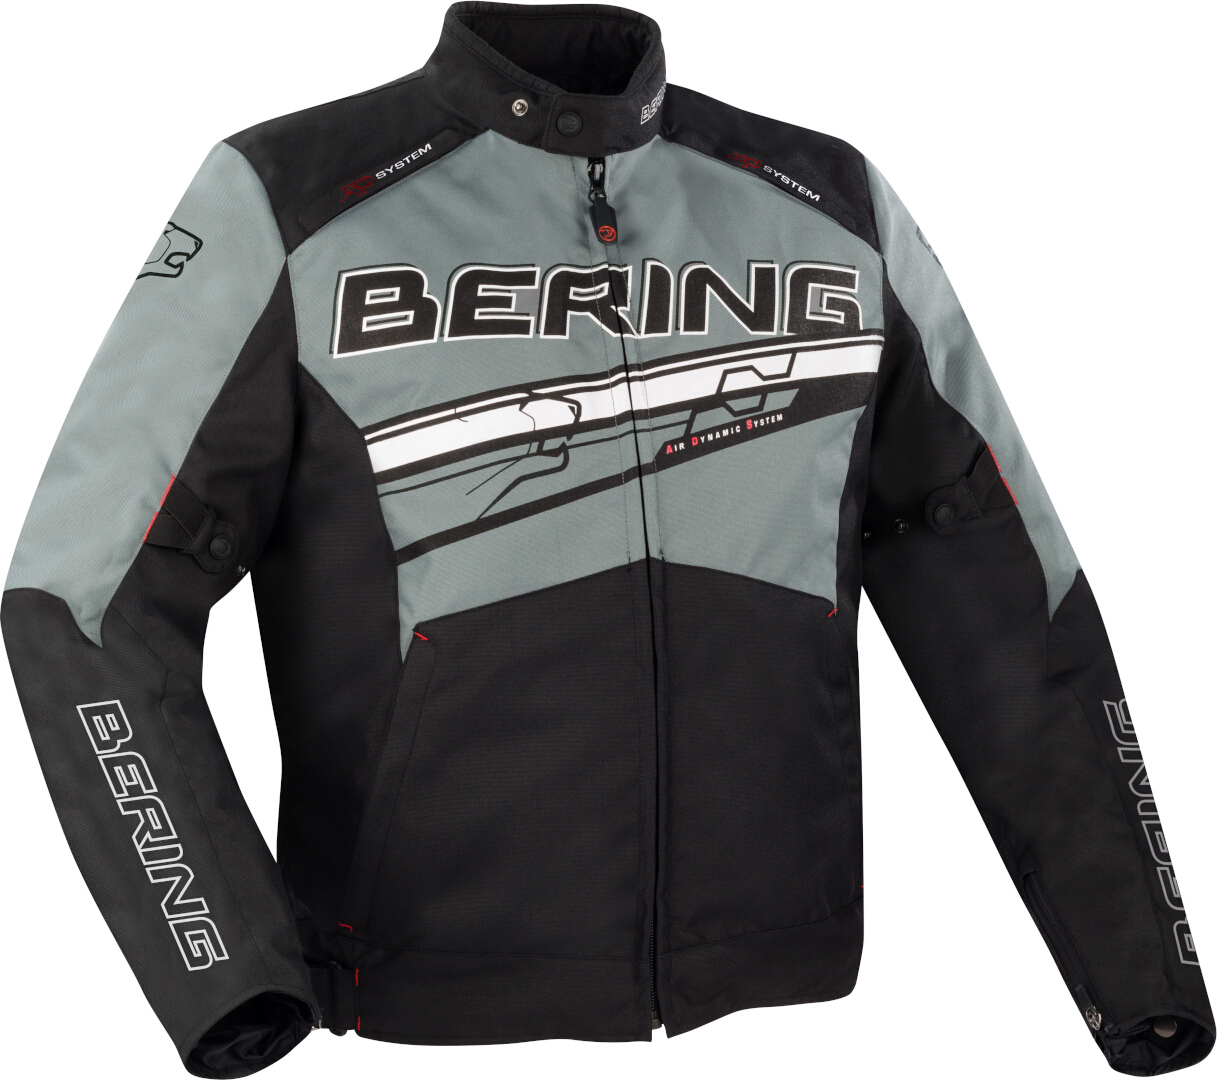 Bering Bario Motorrad Textiljacke, schwarz-grau-weiss, Größe L